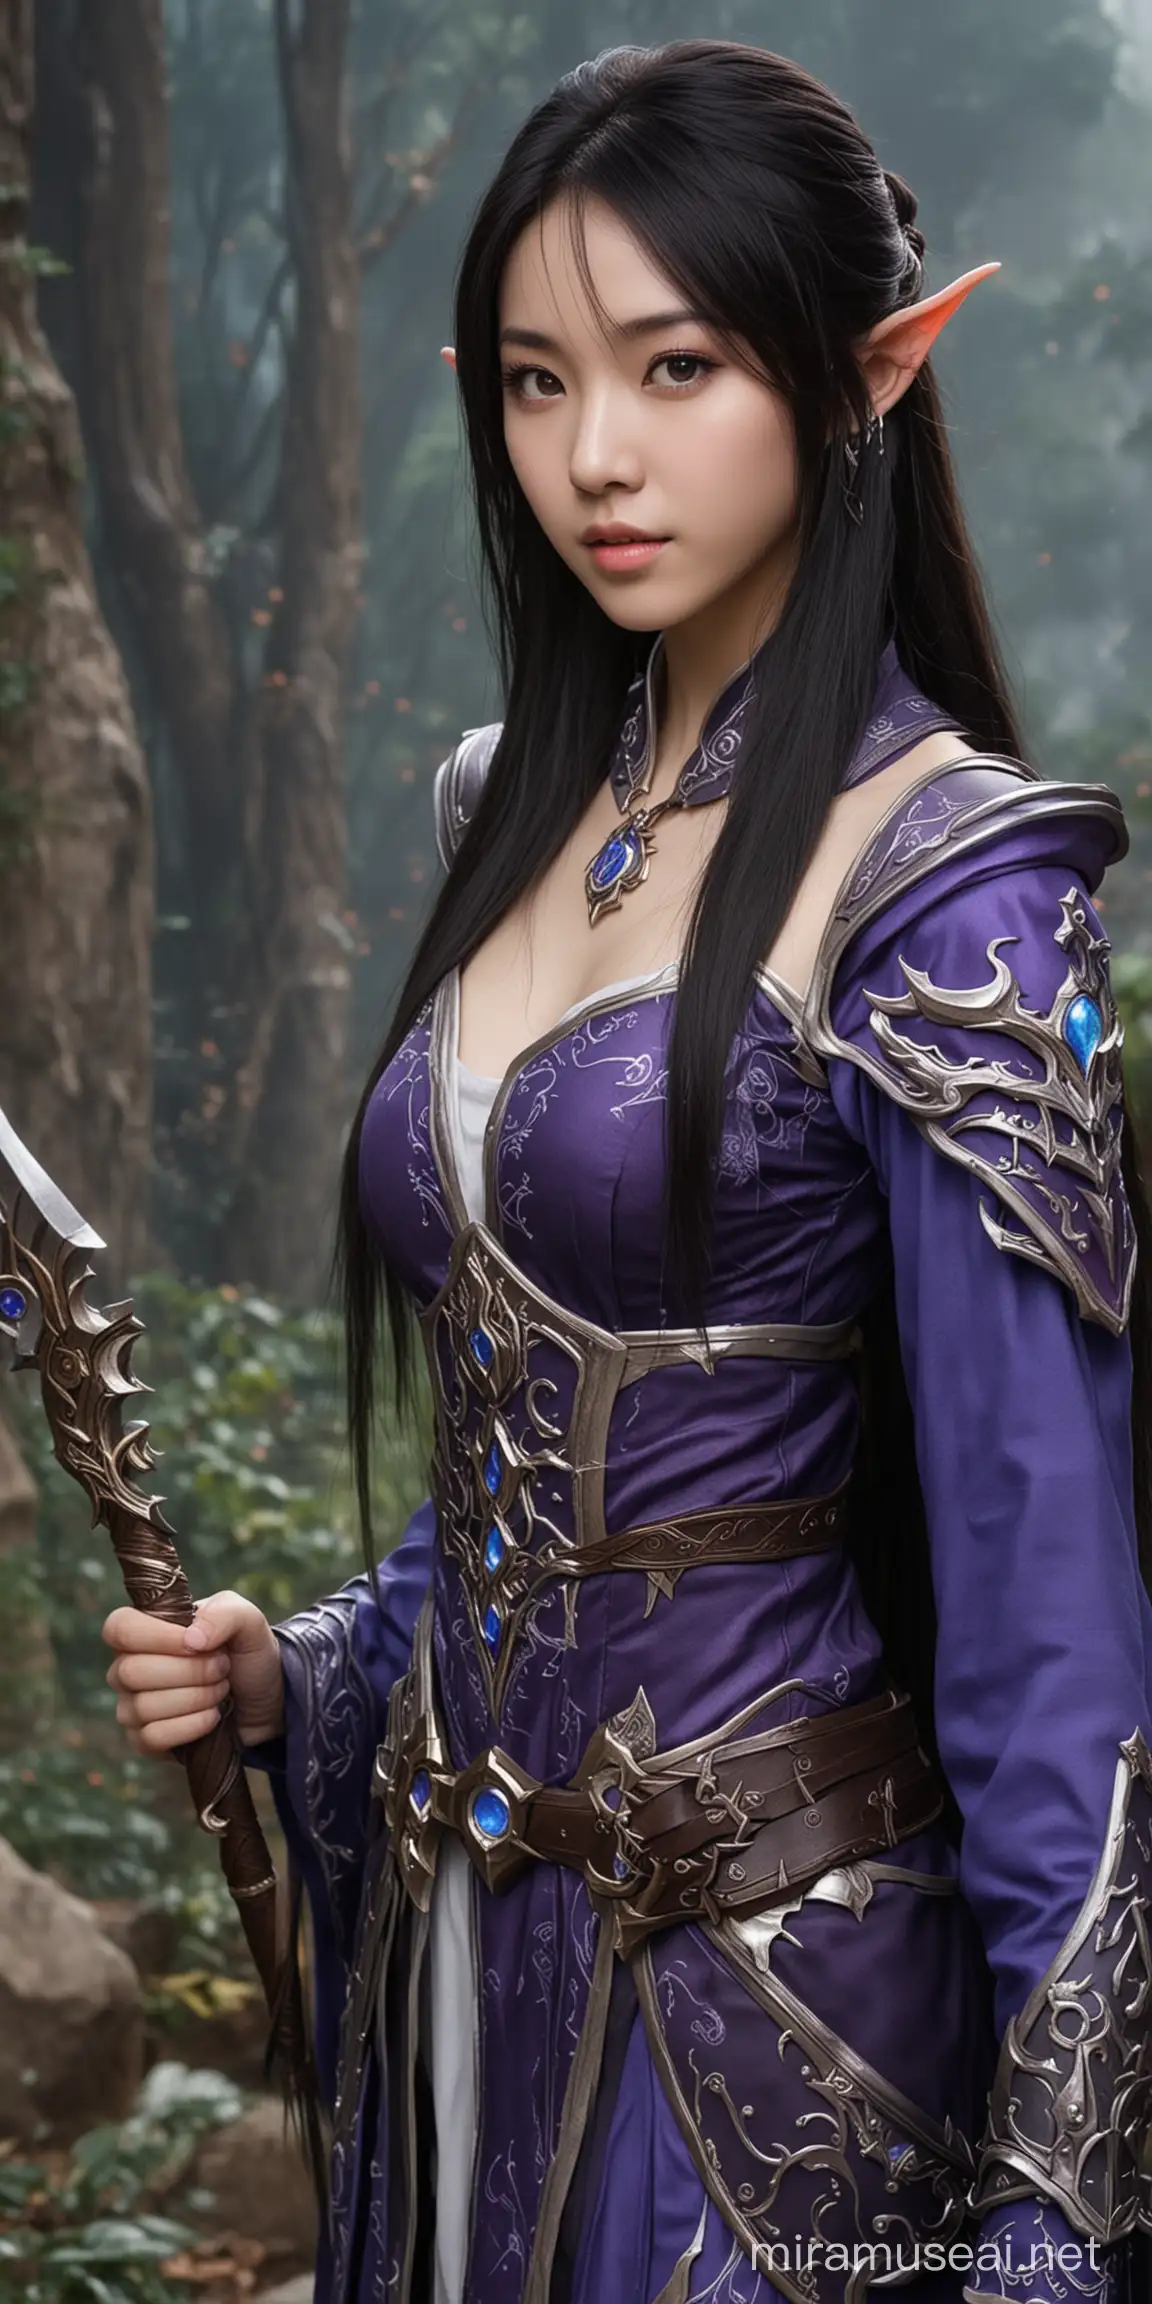 Mystical Portrait Lin Qingxia Night Elf of Warcraft